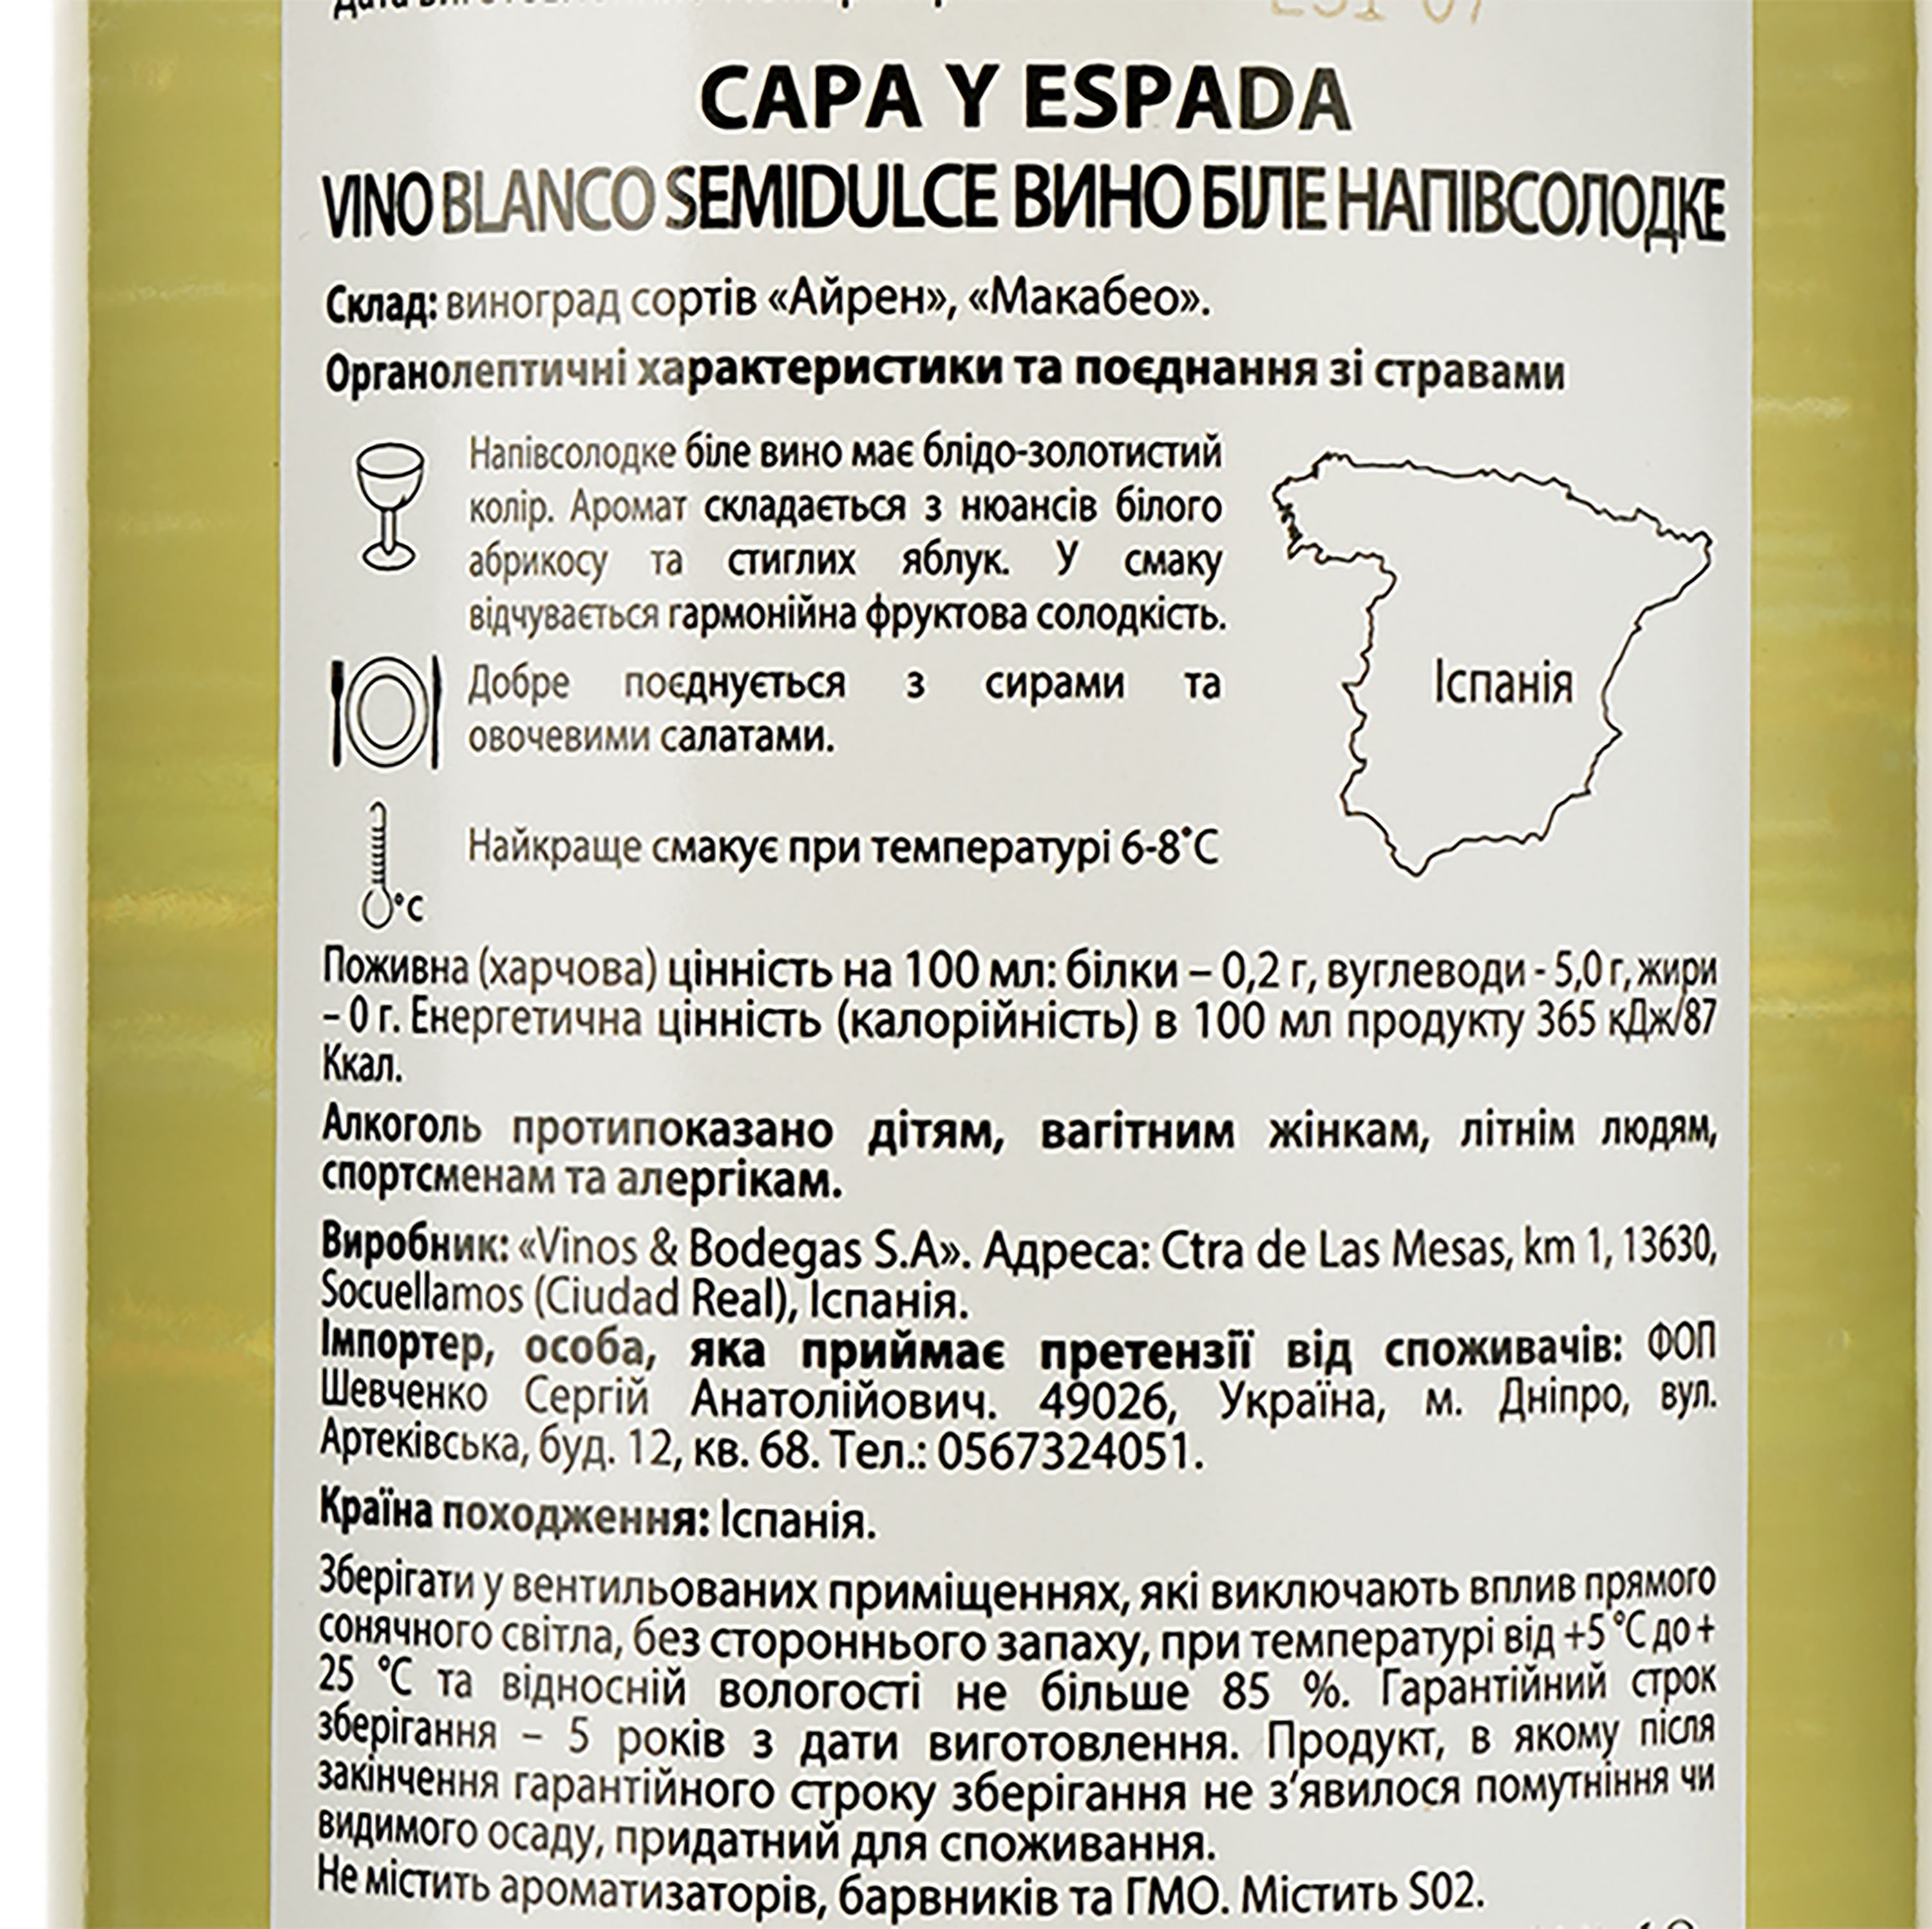 Вино Capa y Espada Vino Blanco Semidulce, белое, полусладкое, 0,75 л - фото 3